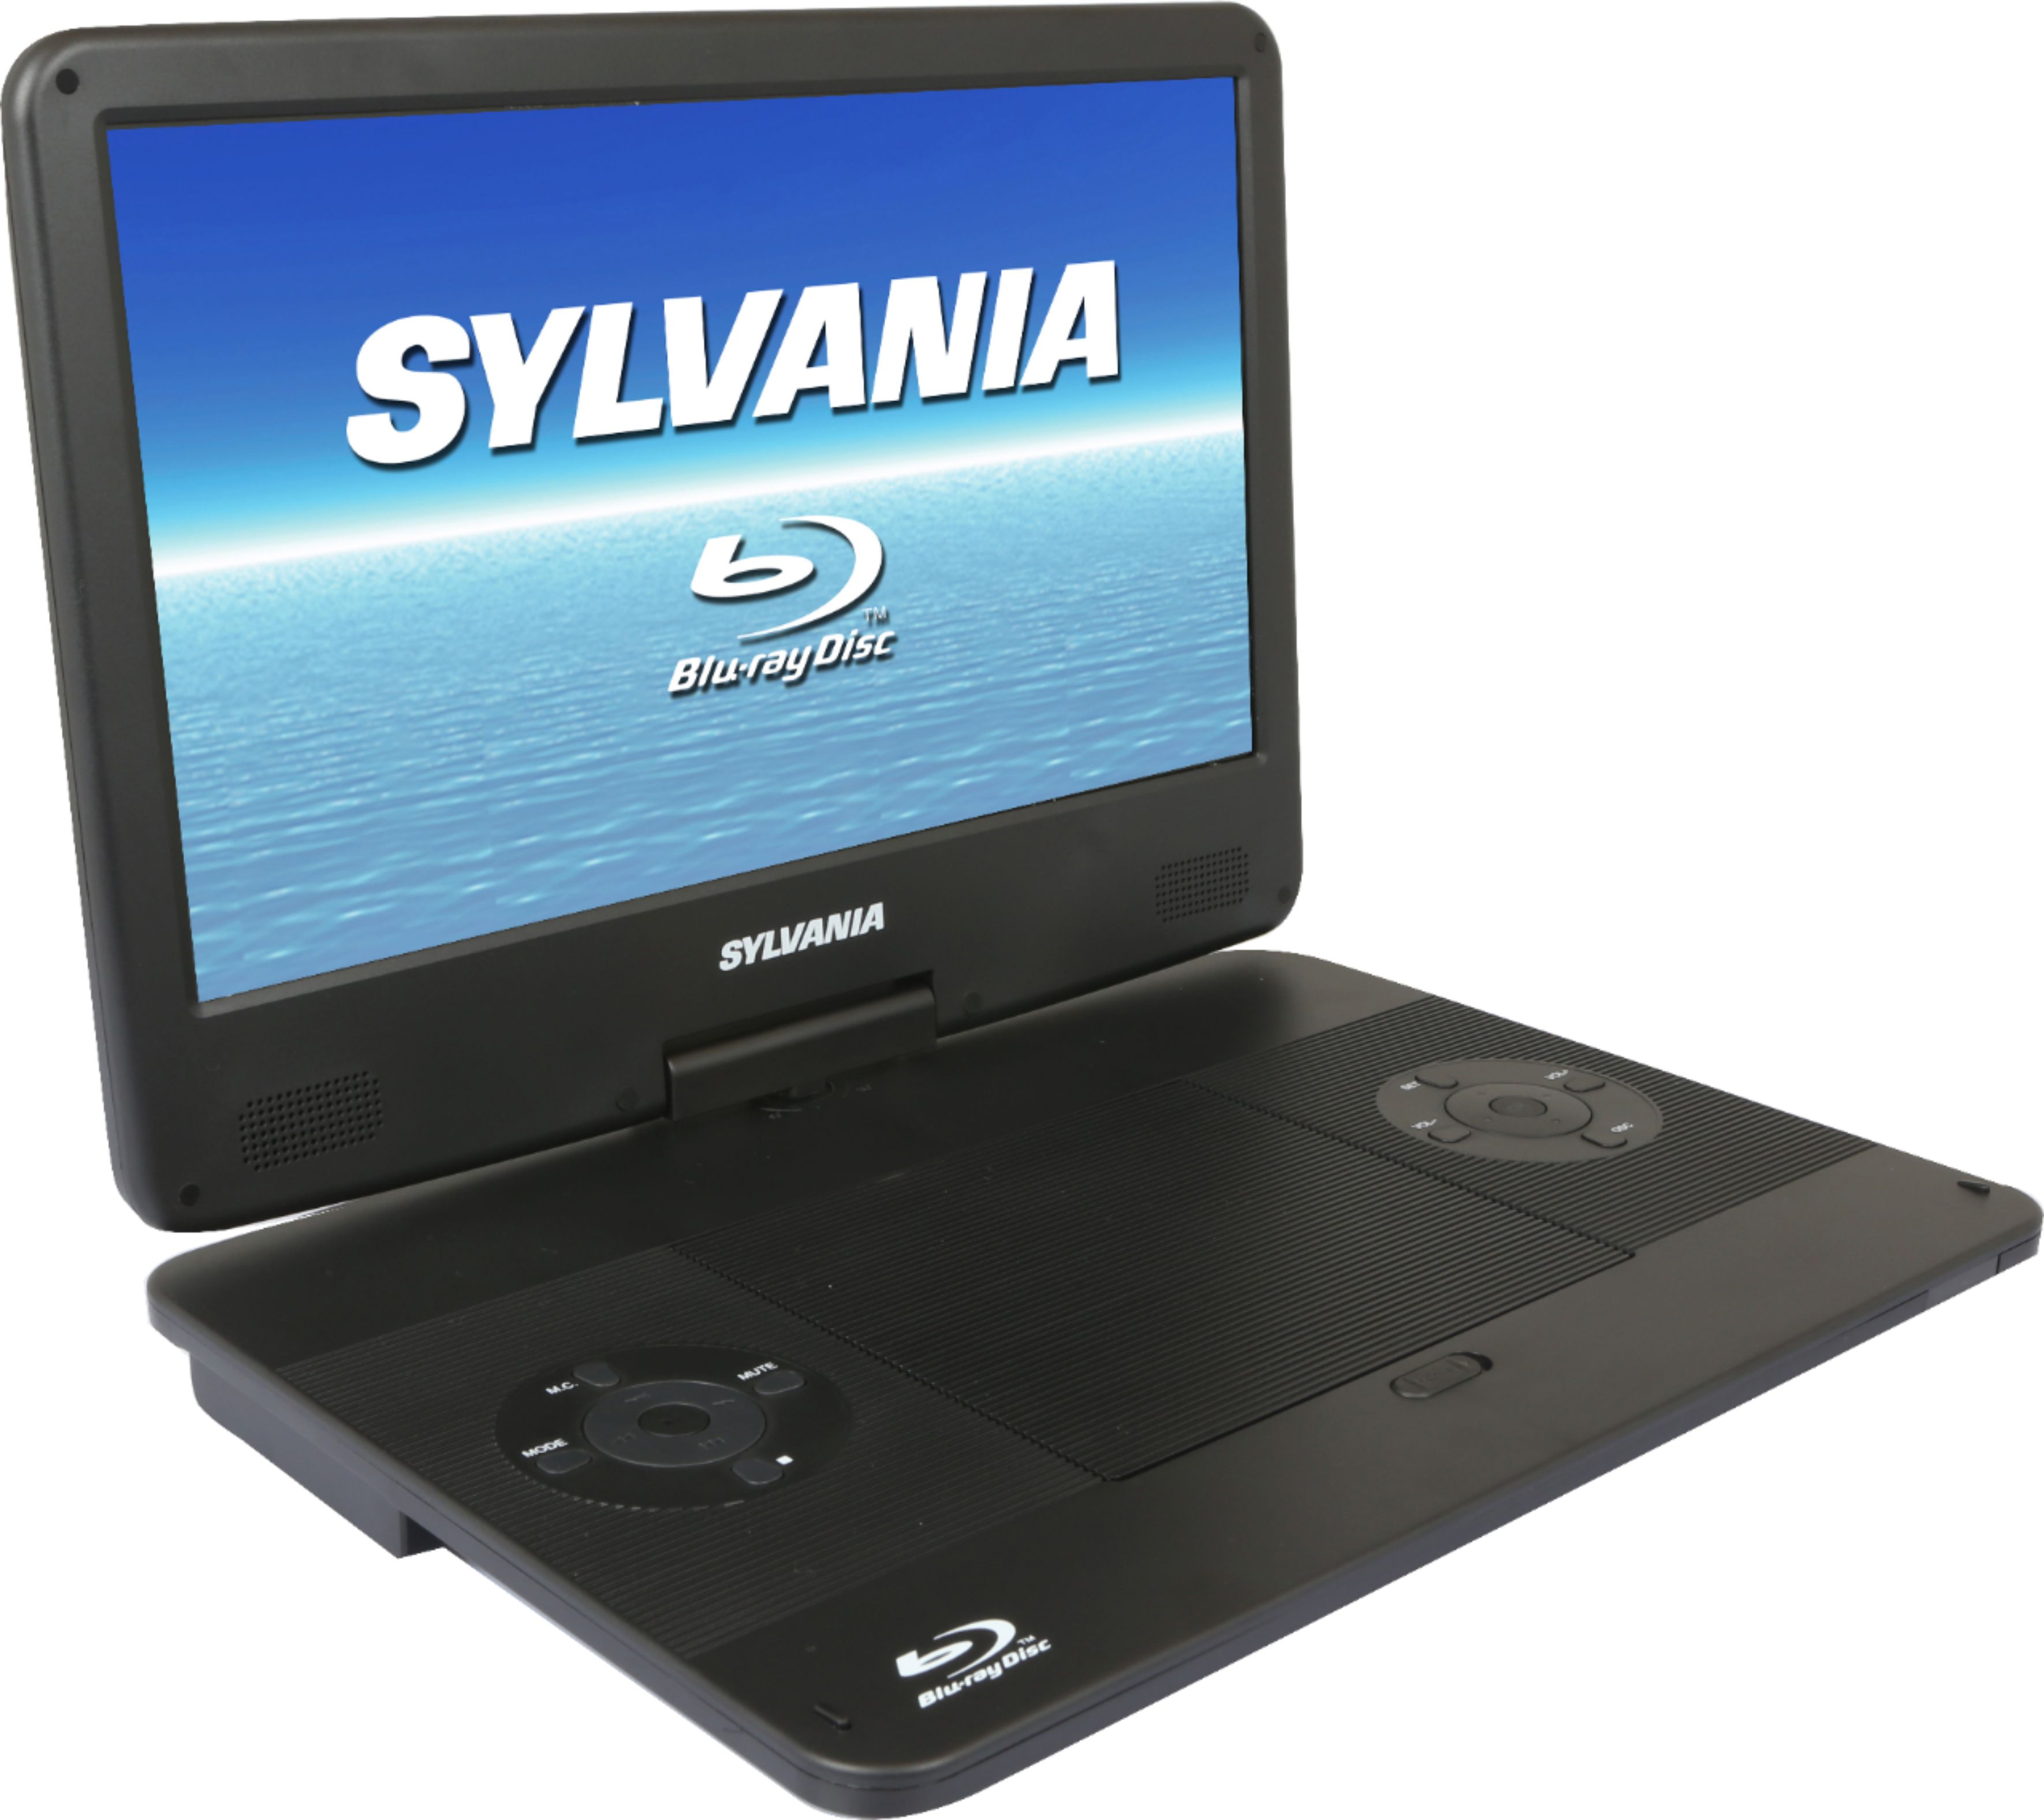 Angle View: Sylvania - 13.3” Portable Blu-ray Player with Swivel Screen - Black